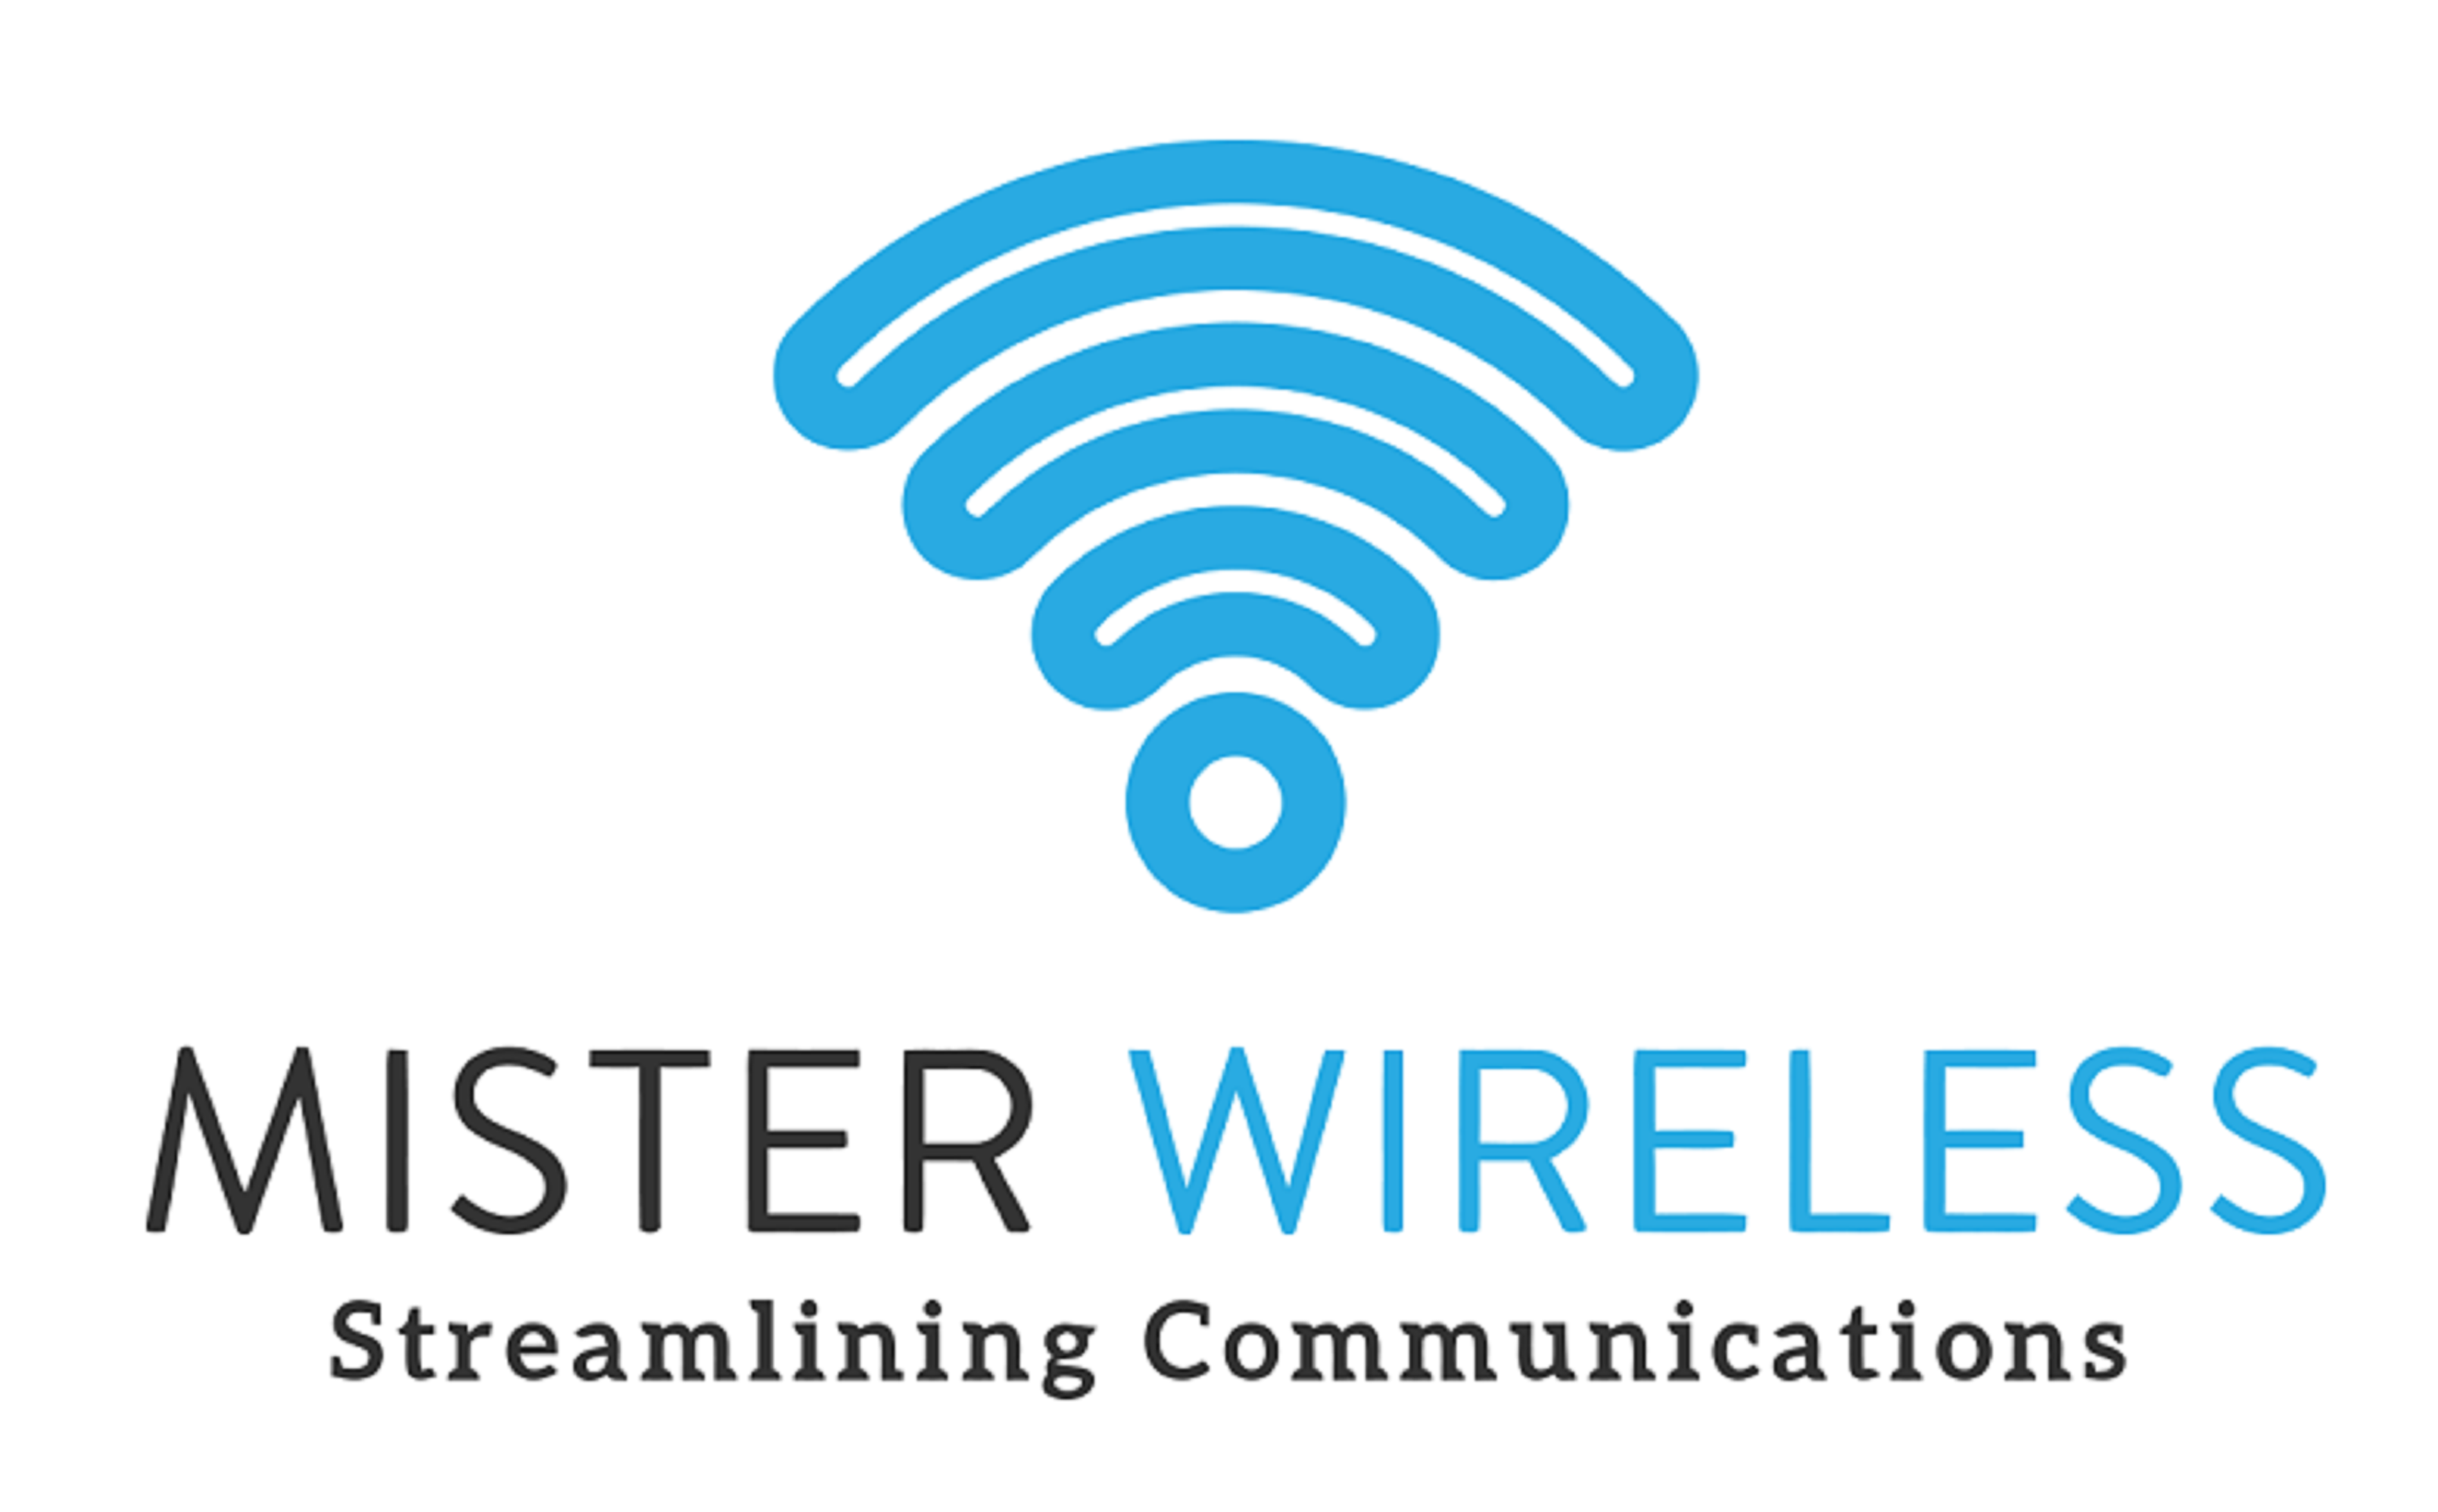 Mister Wireless